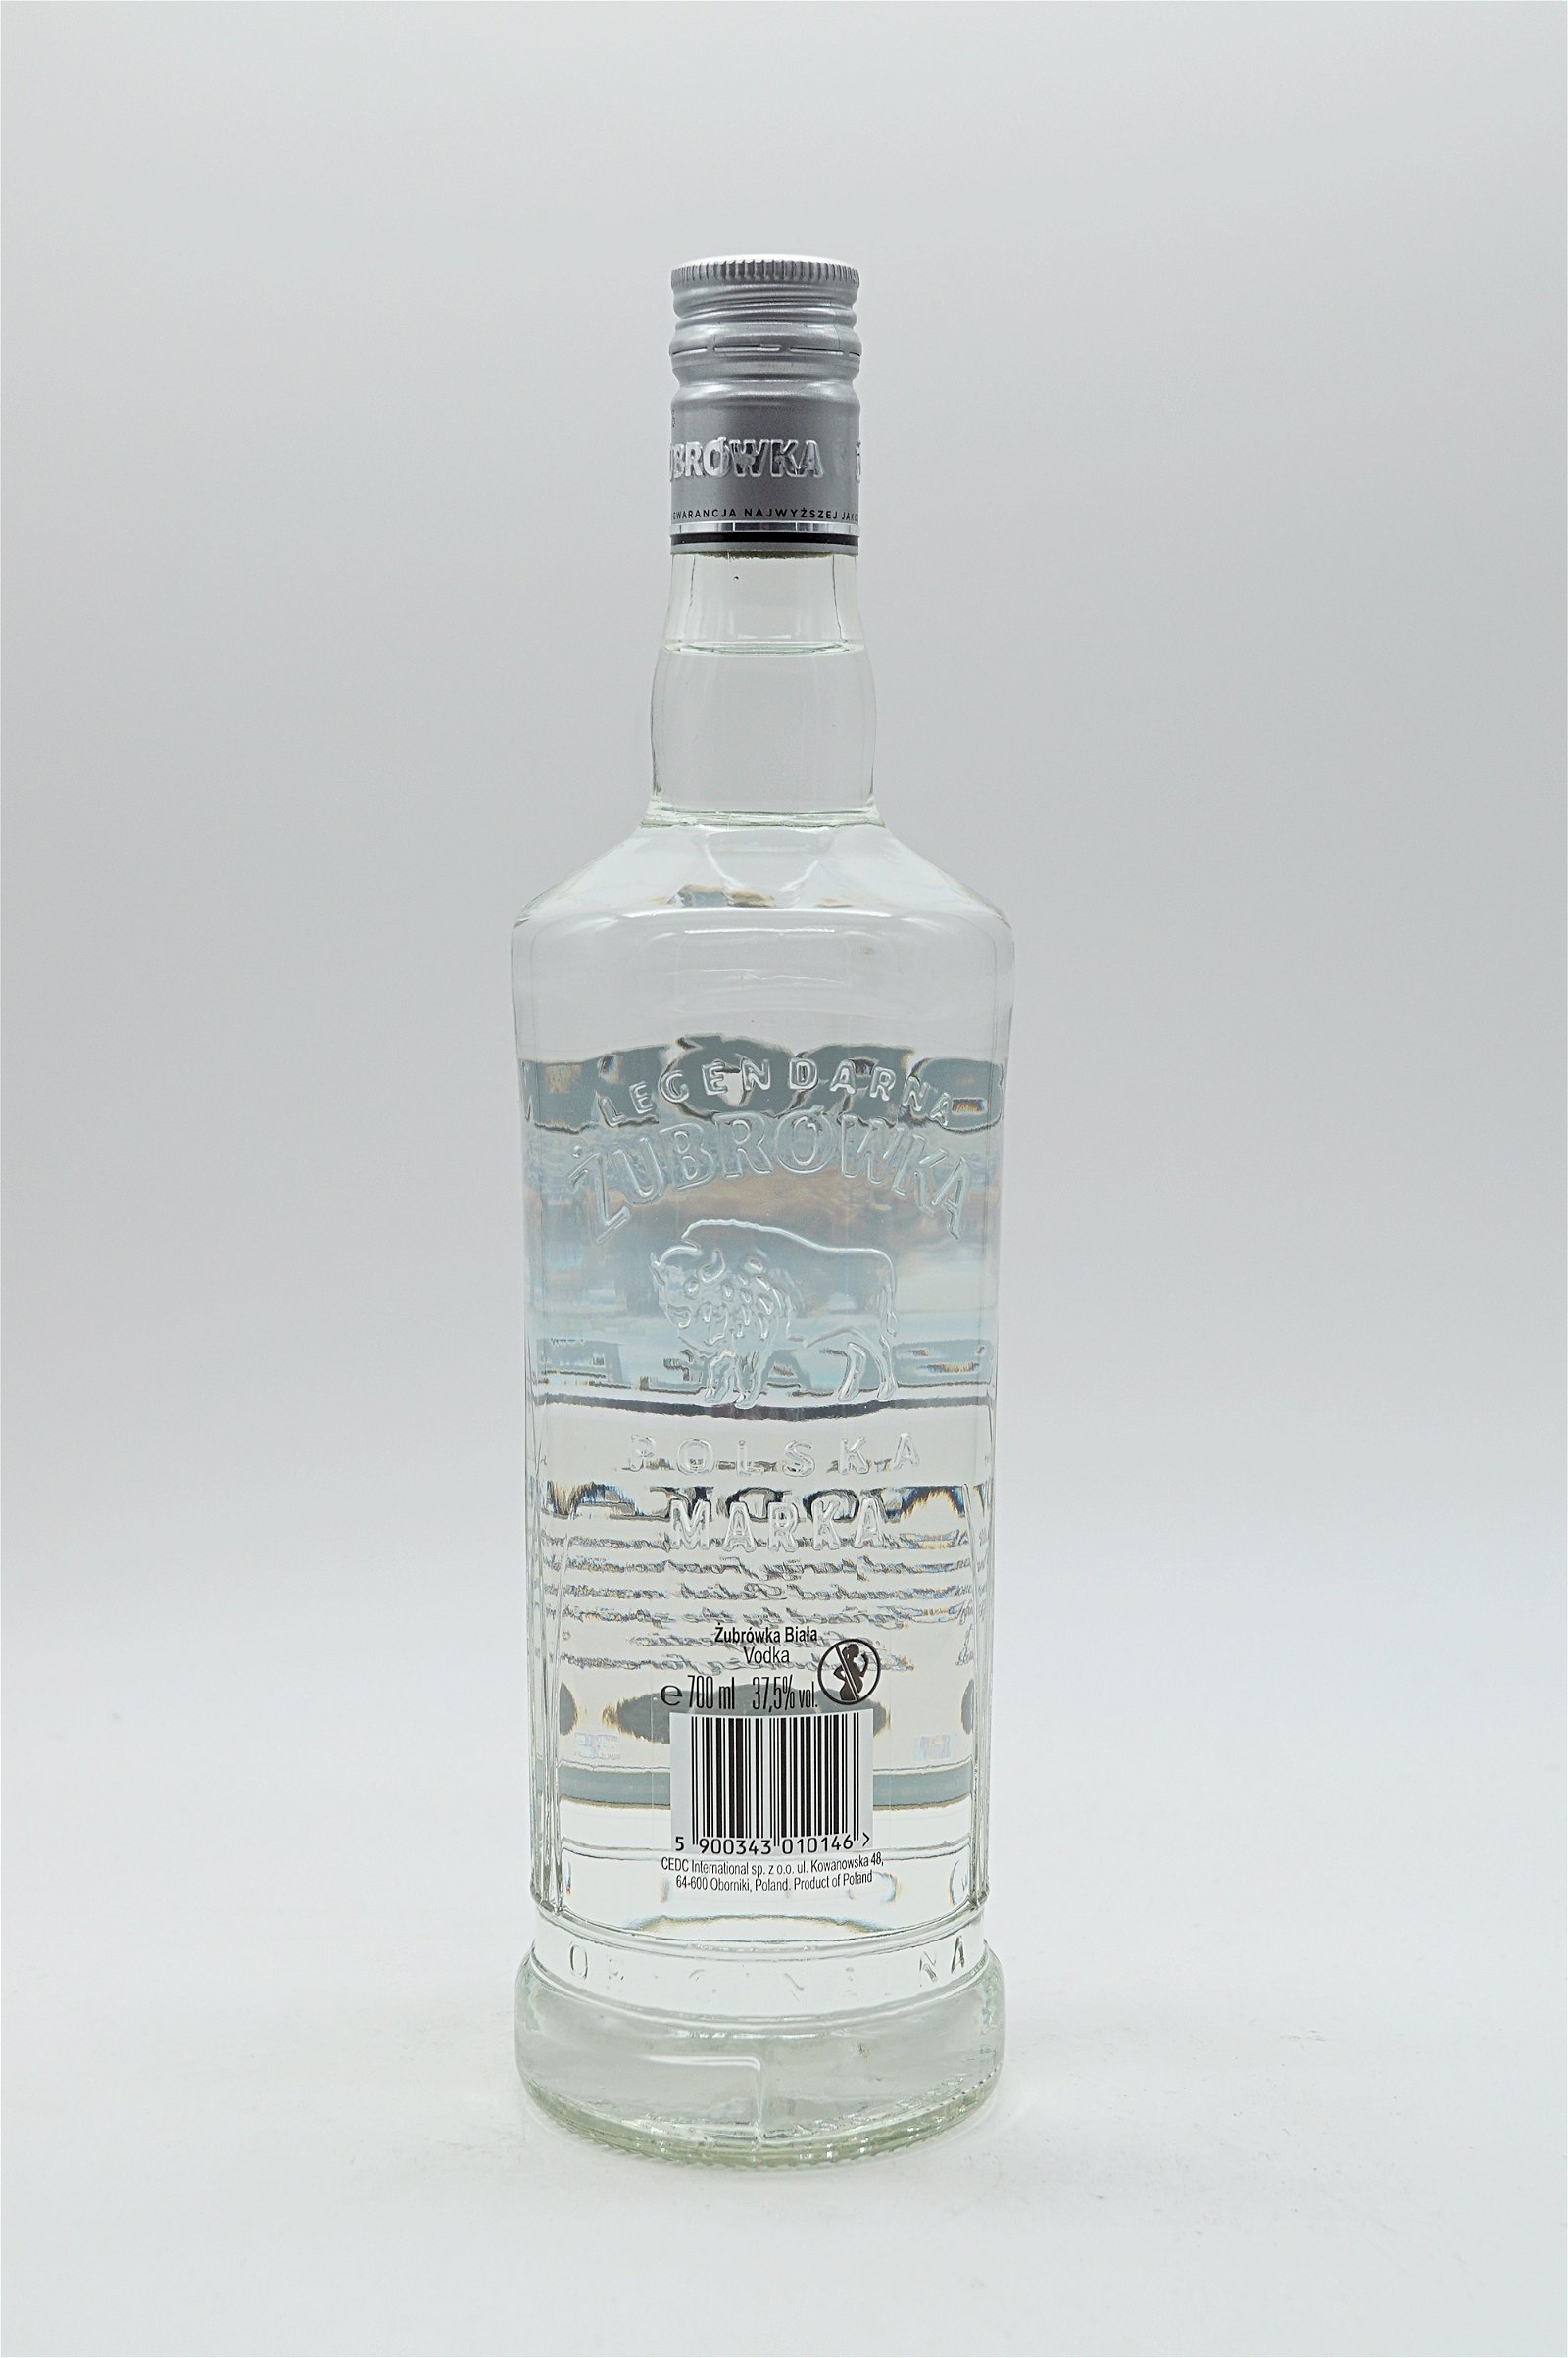 Zubrowka Vodka Biala